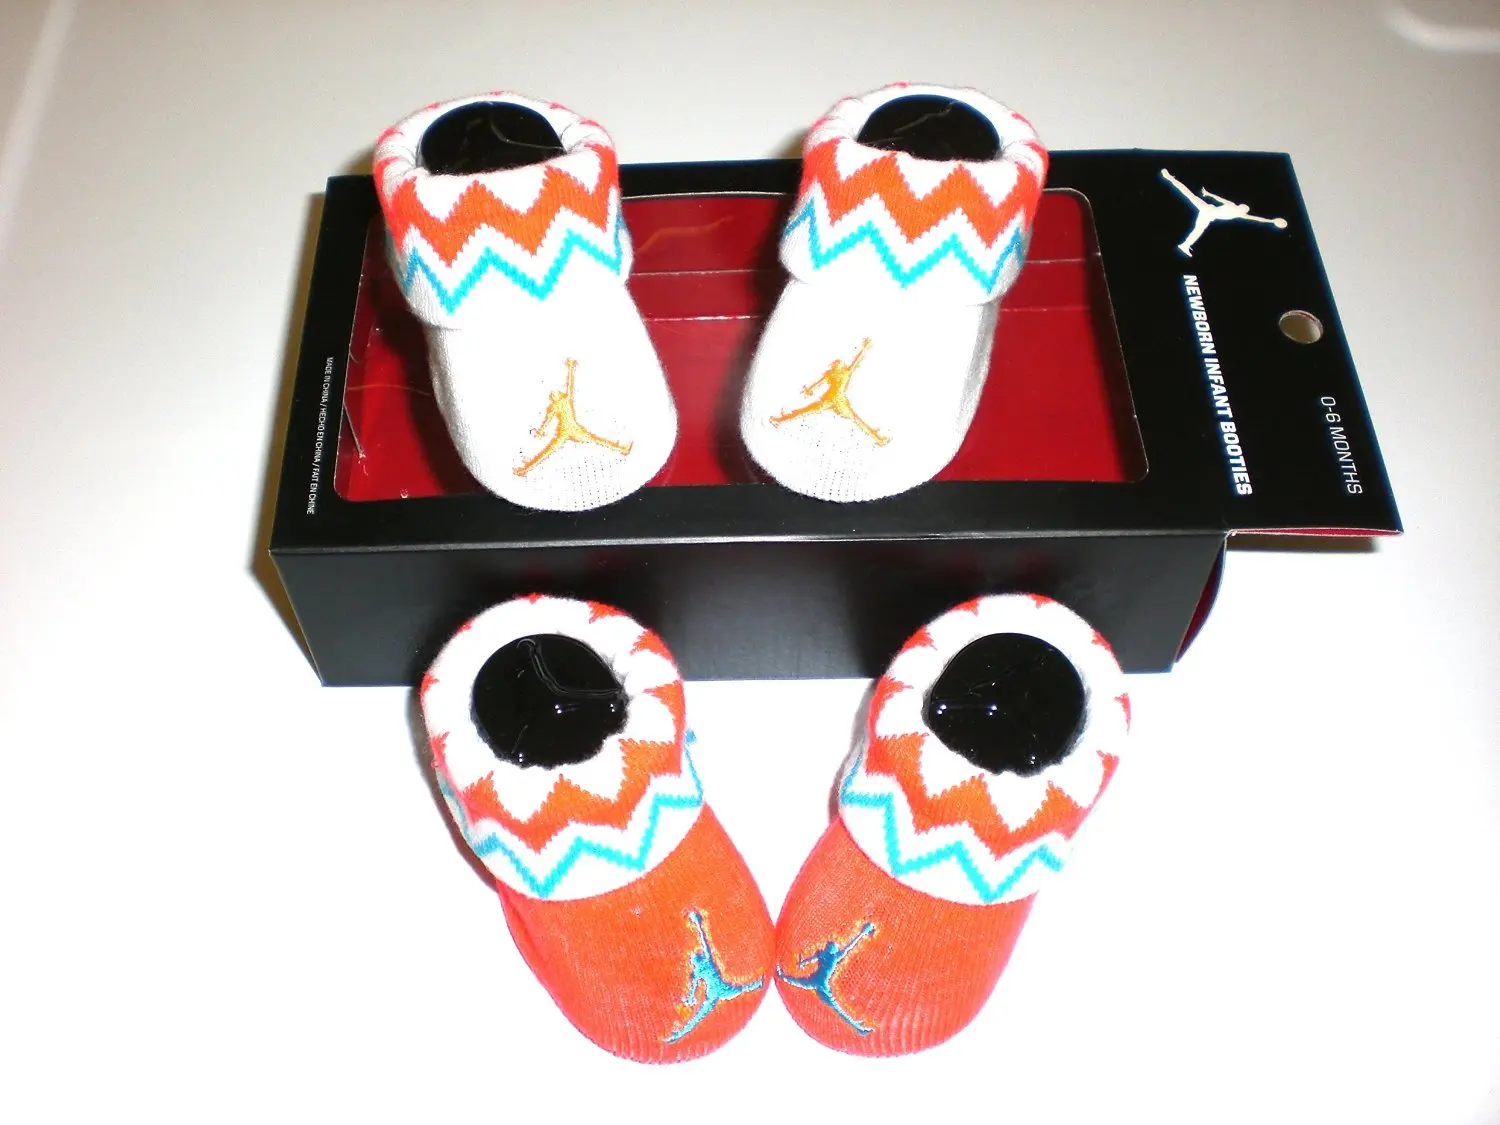 newborn baby shoes size 0 jordan